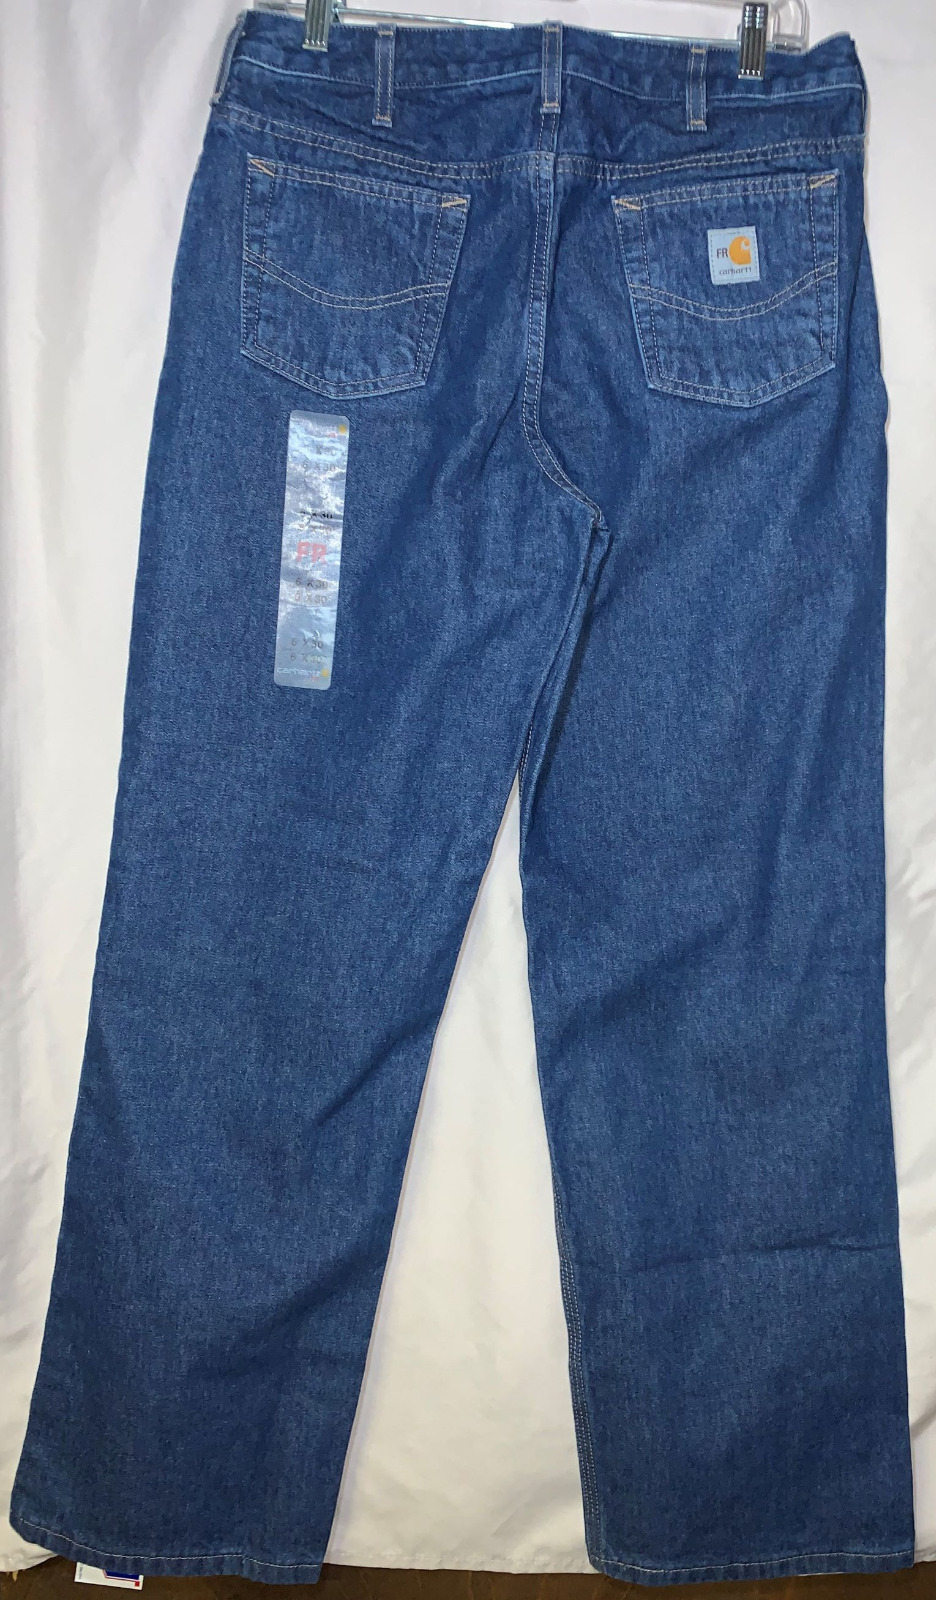 CARHARTT Women’s FR 101249 FLAME RESISTANT 100% Cotton Jeans Size 6 X ...